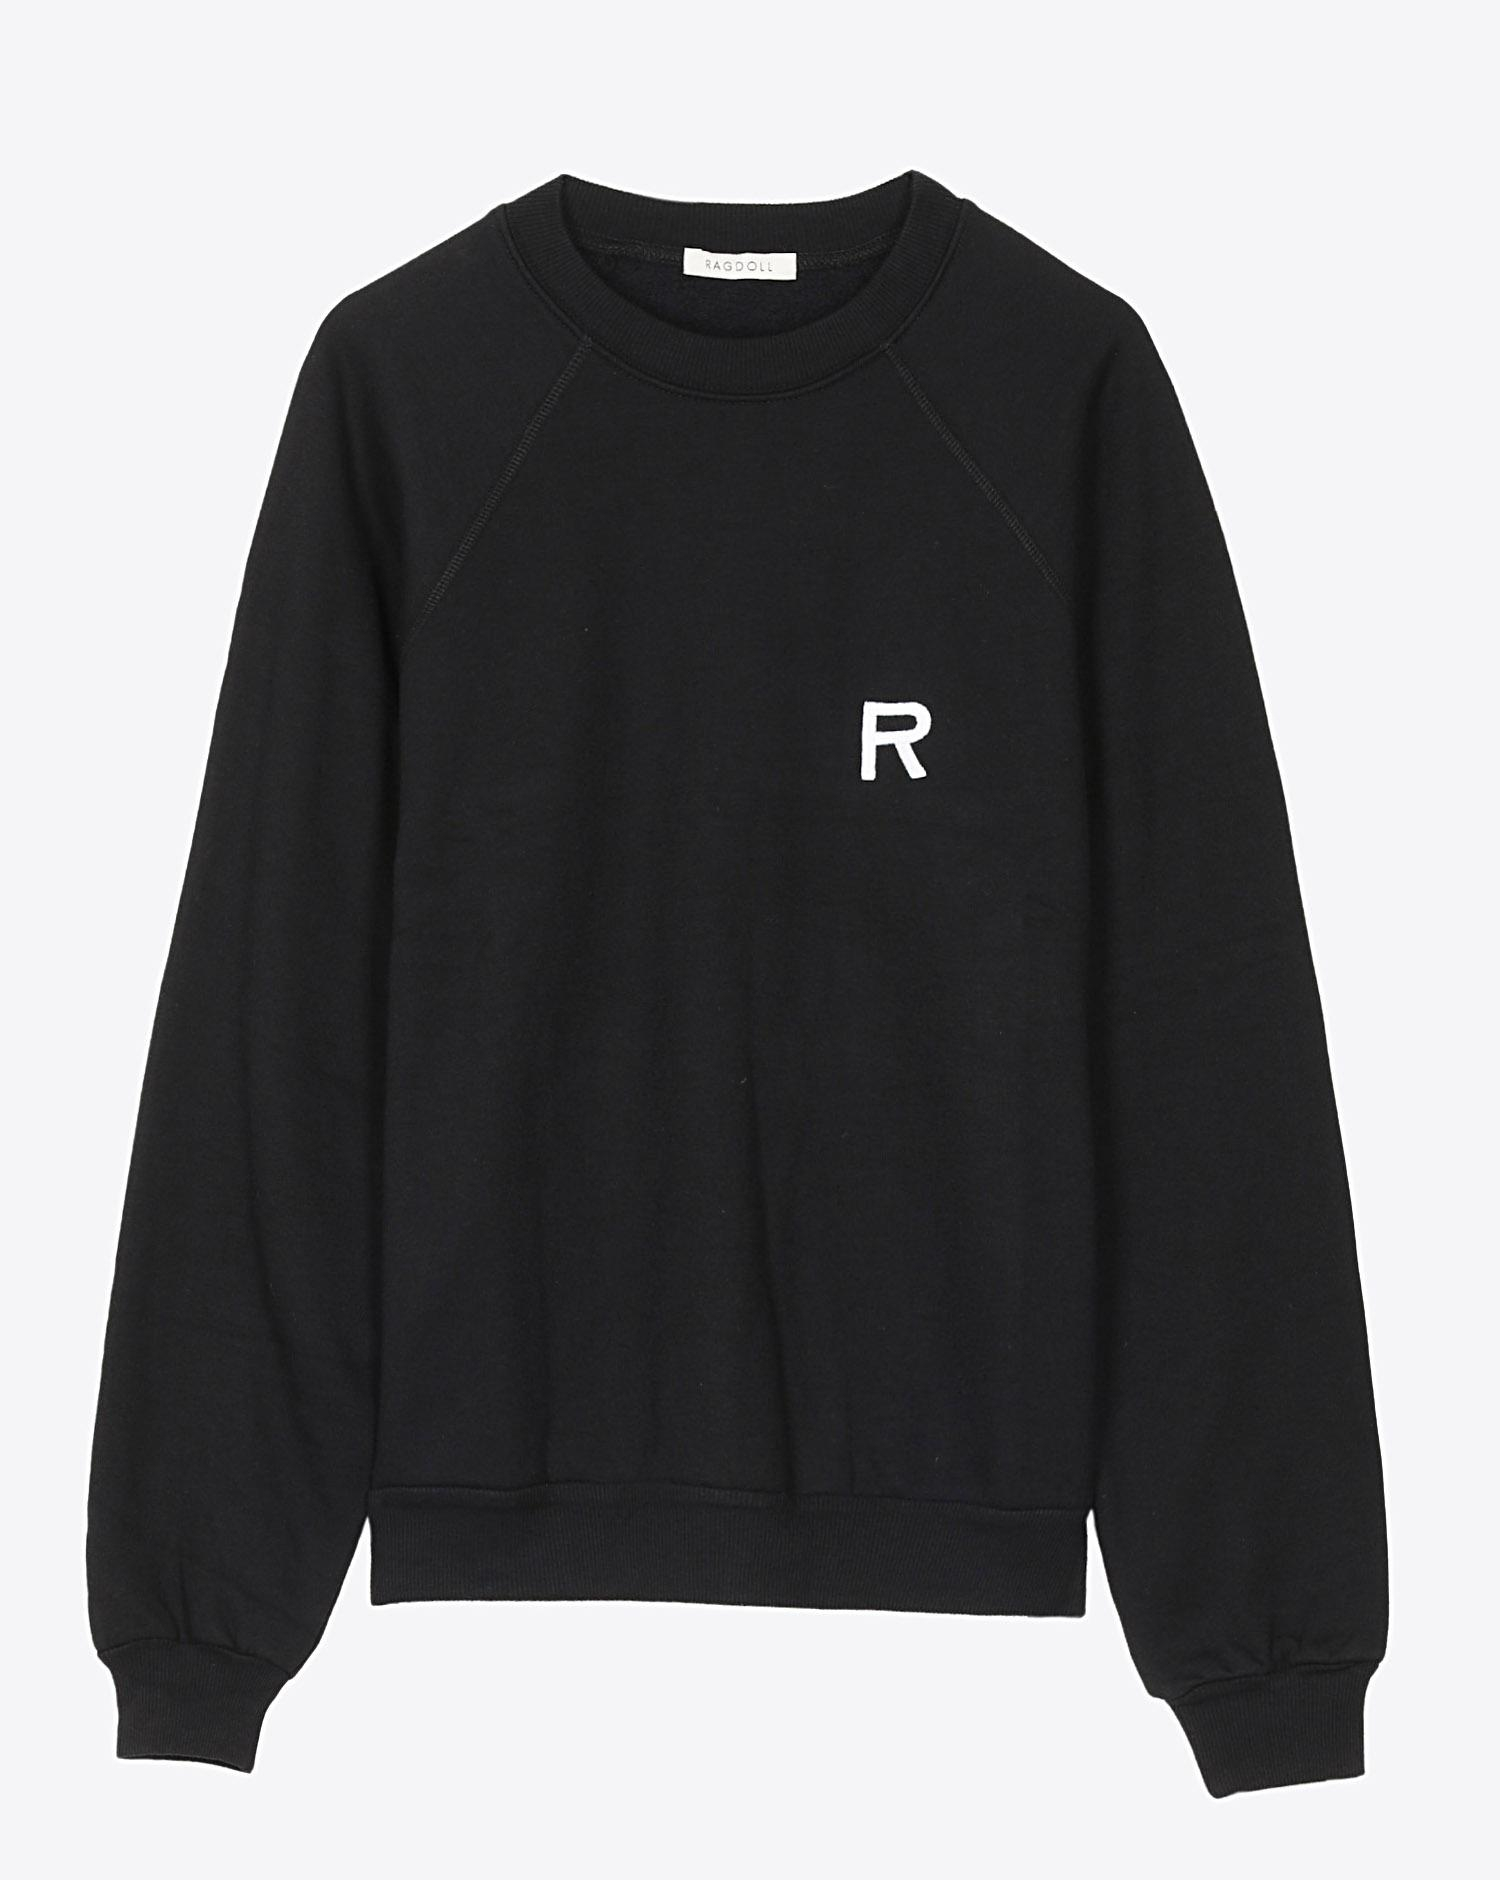 Ragdoll LA Vintage Sweatshirt - Black  